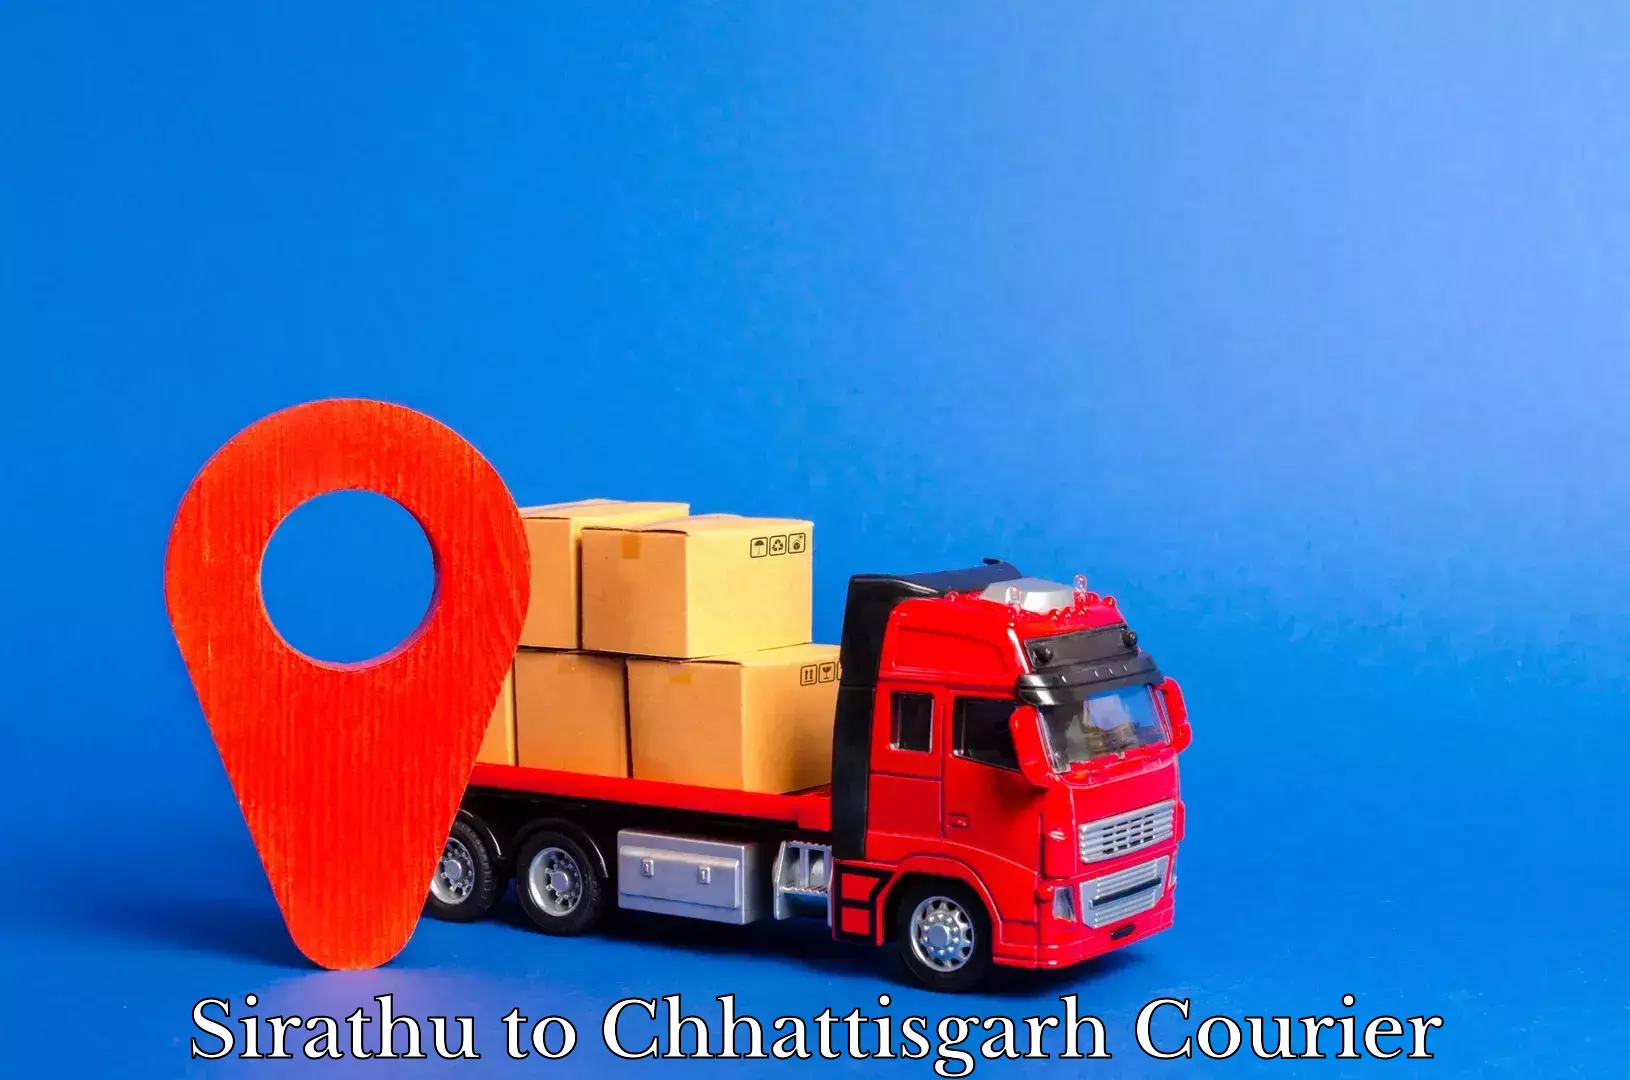 Cross-border shipping Sirathu to Chhattisgarh